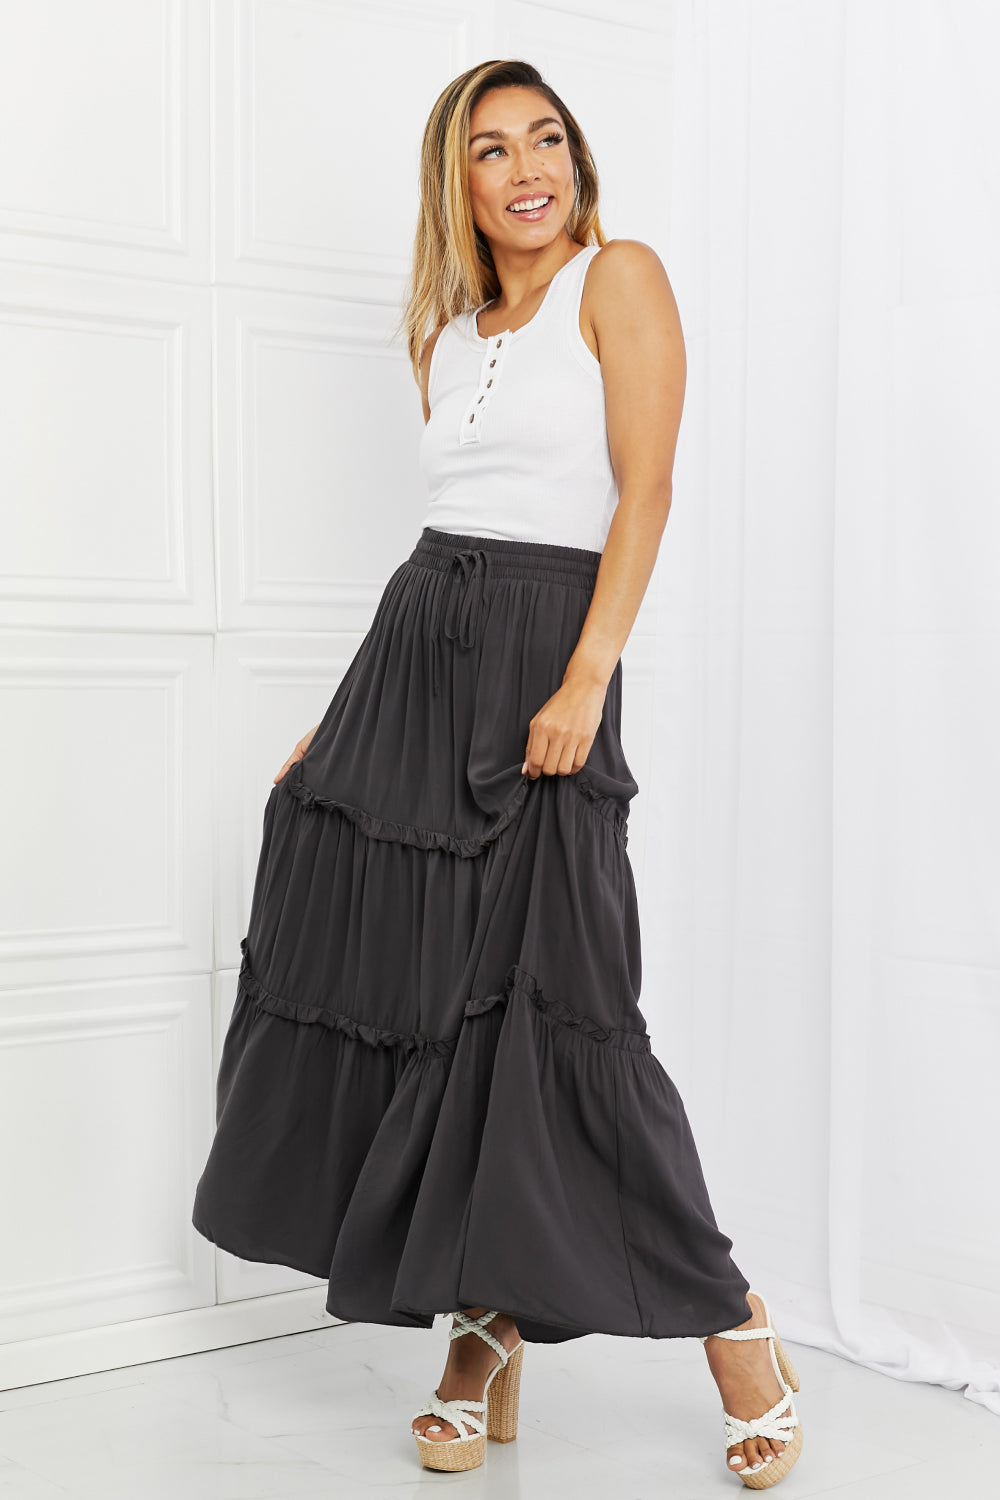 Zenana Summer Days Ruffled Maxi Skirt in Ash Grey